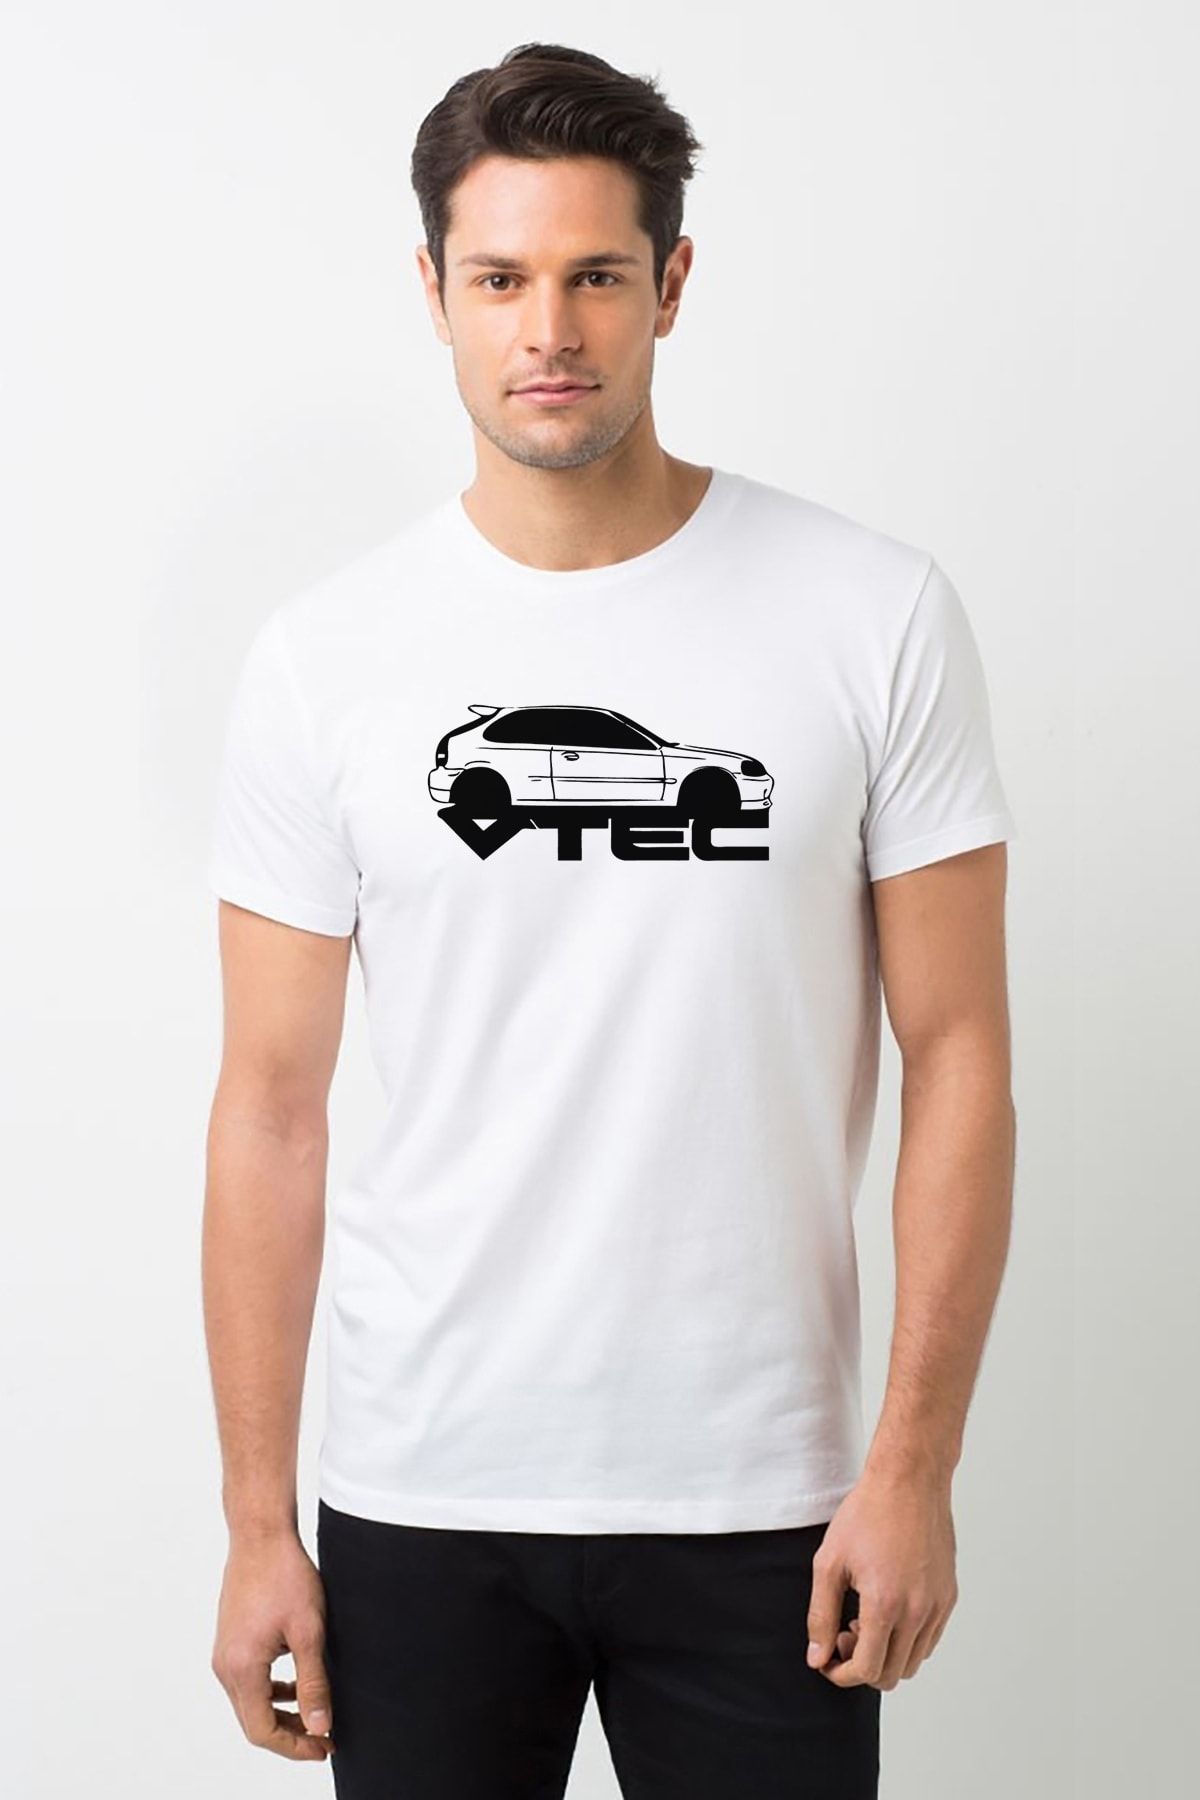 QIVI Honda 2017 Honda Civic Vtech Baskılı Beyaz Erkek Örme Tshirt